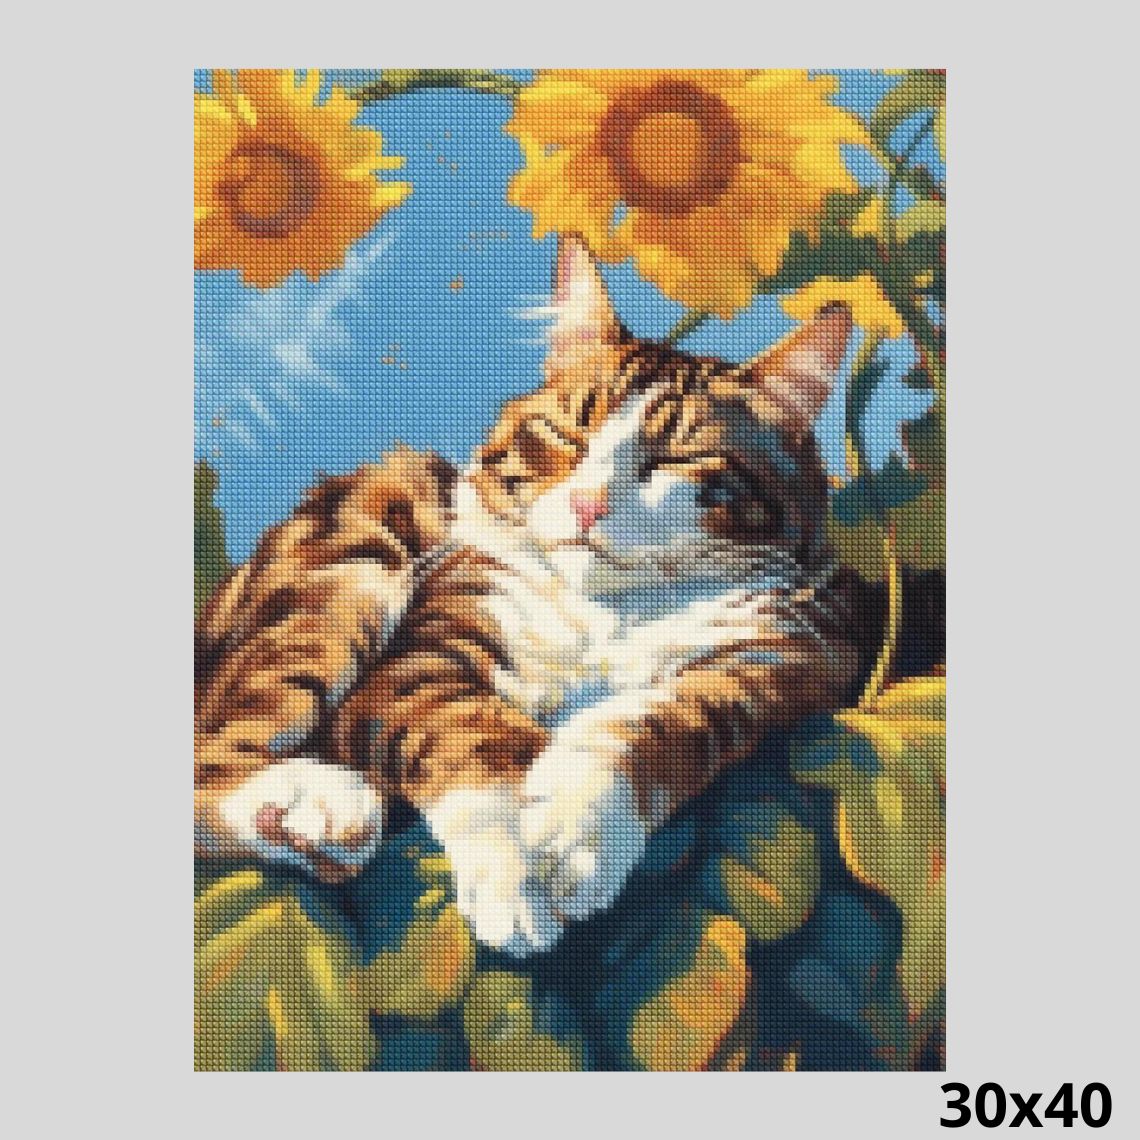 Sleeping Cat and Sunflowers 30x40 Diamond Painting